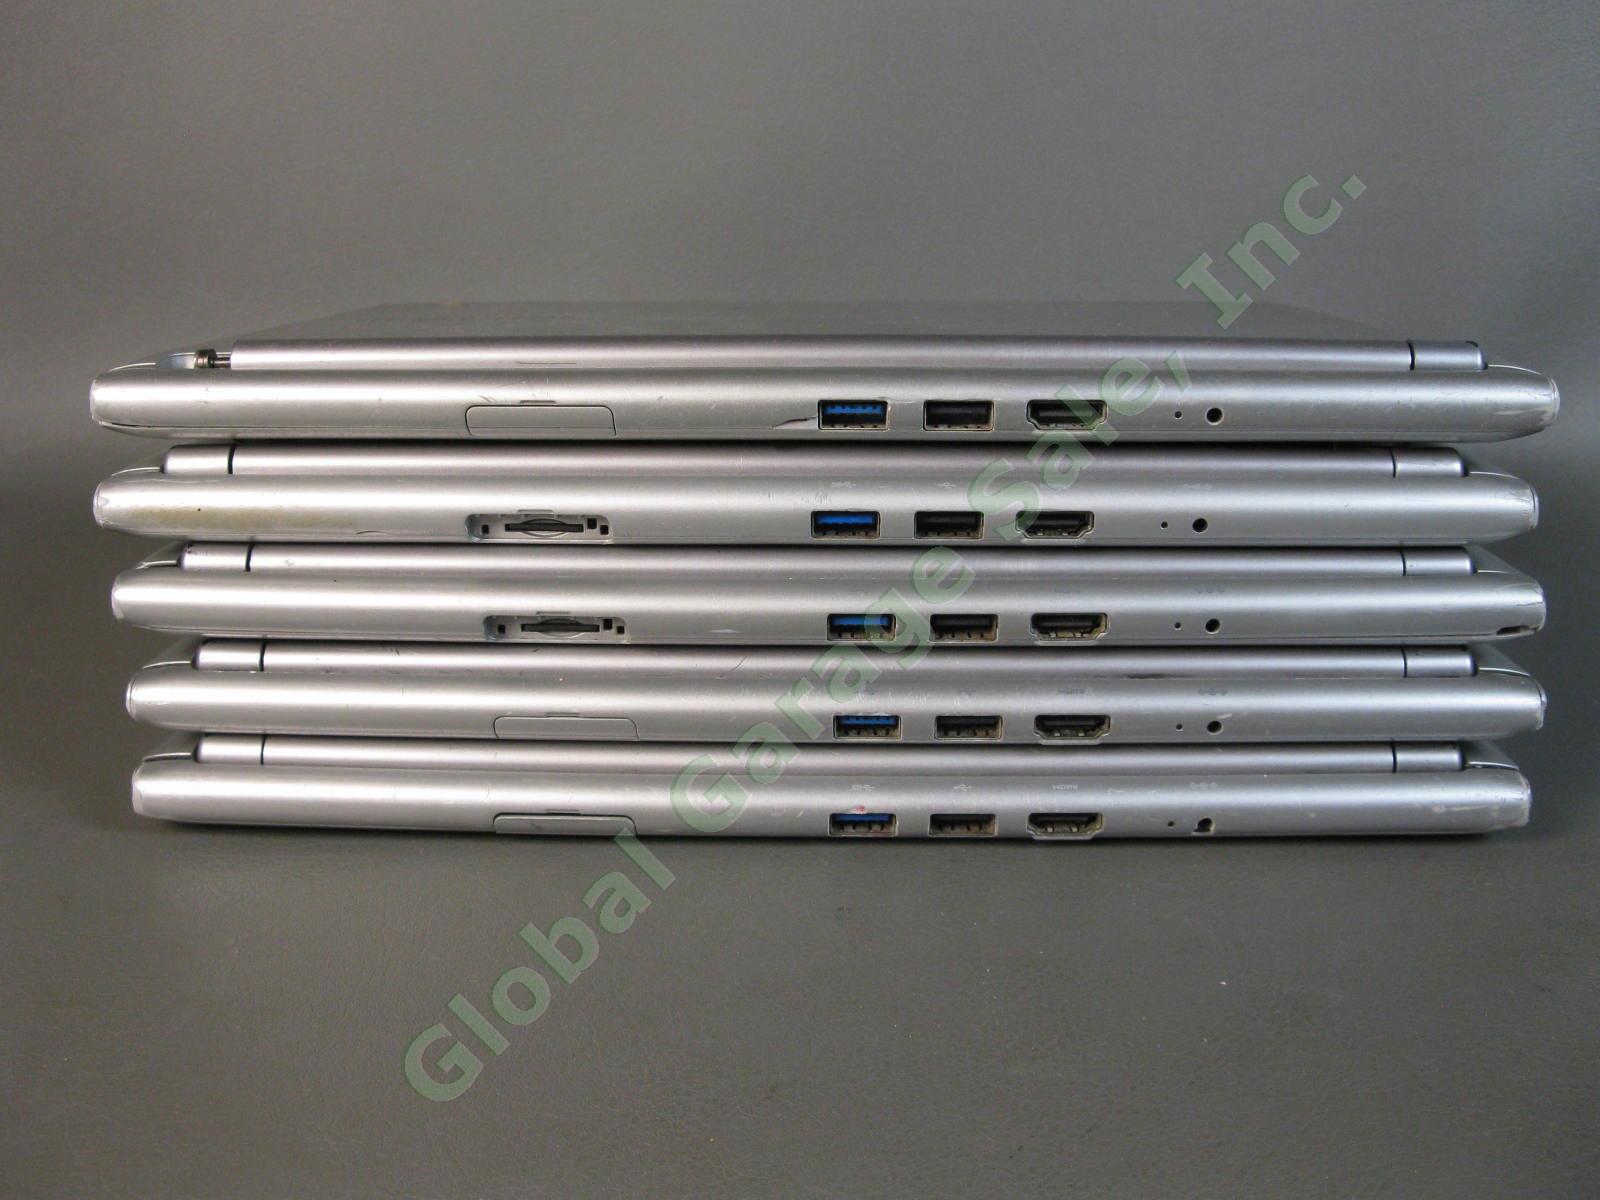 5 Samsung Chromebook 303C Laptop Computers Lot 11.6" 1.7GHz 2GB 16GB XE303C12 6